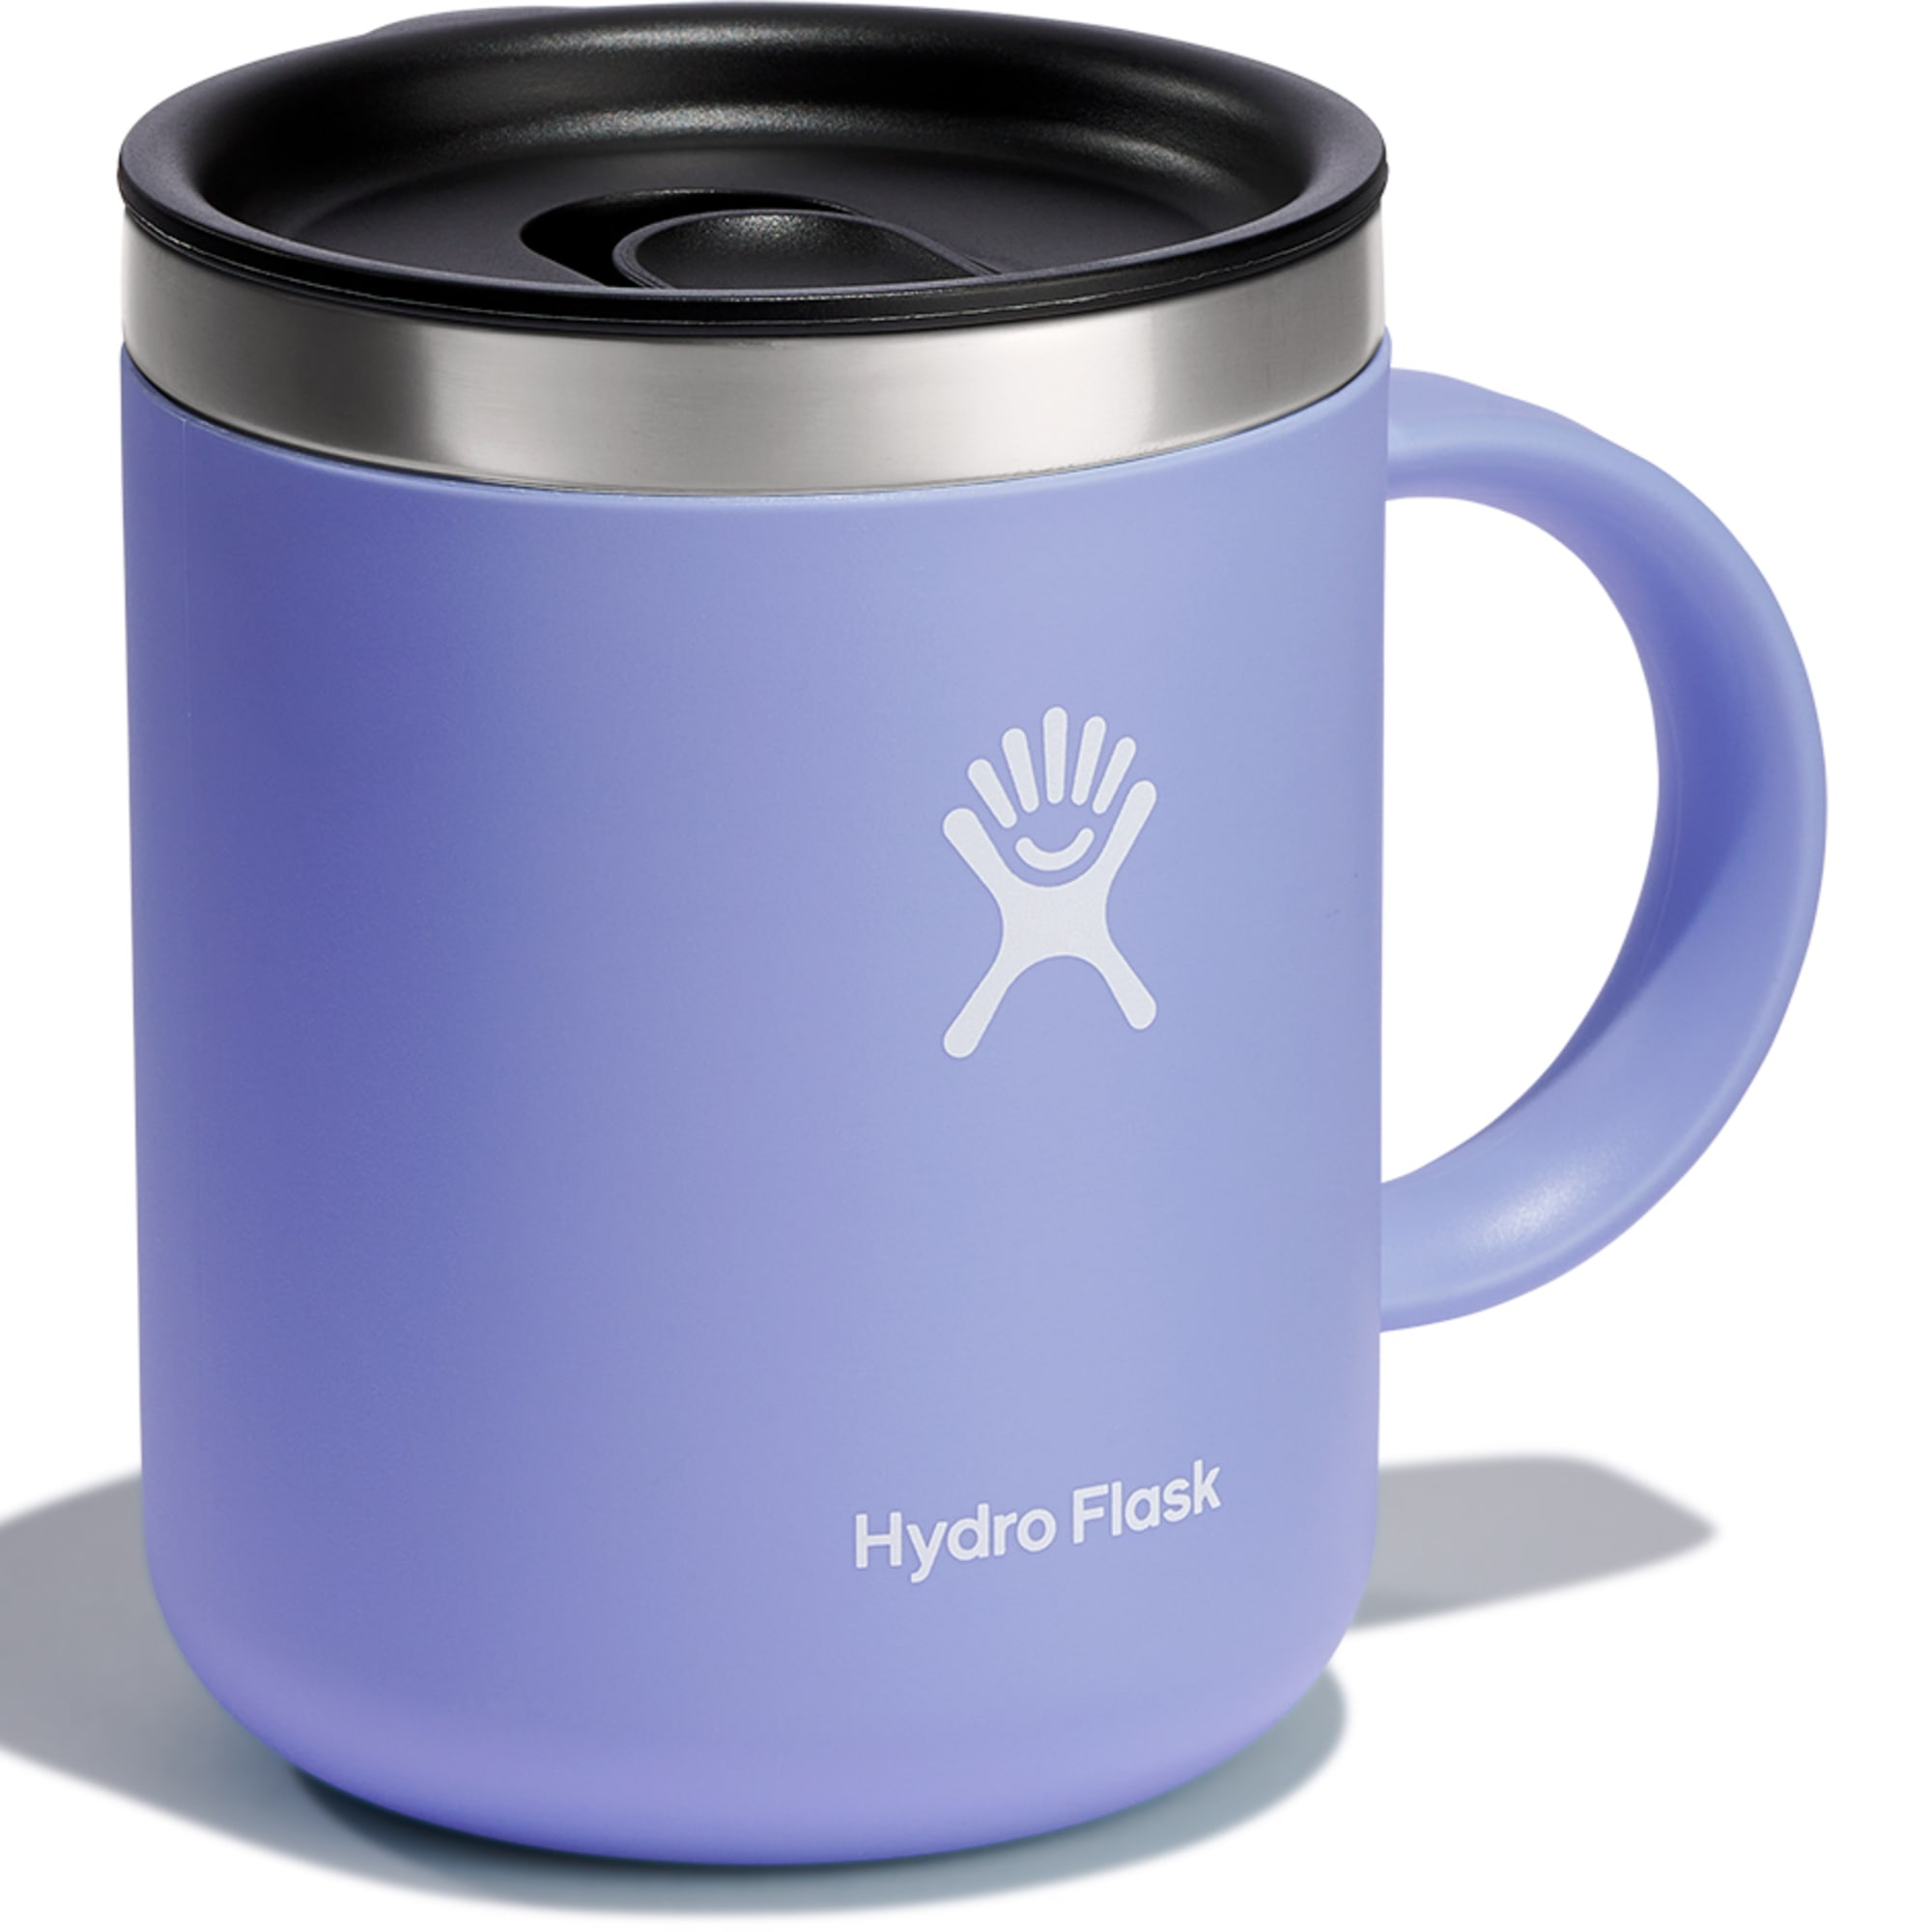 Hydro Flask Coffee Mug — The Grind Coffee House